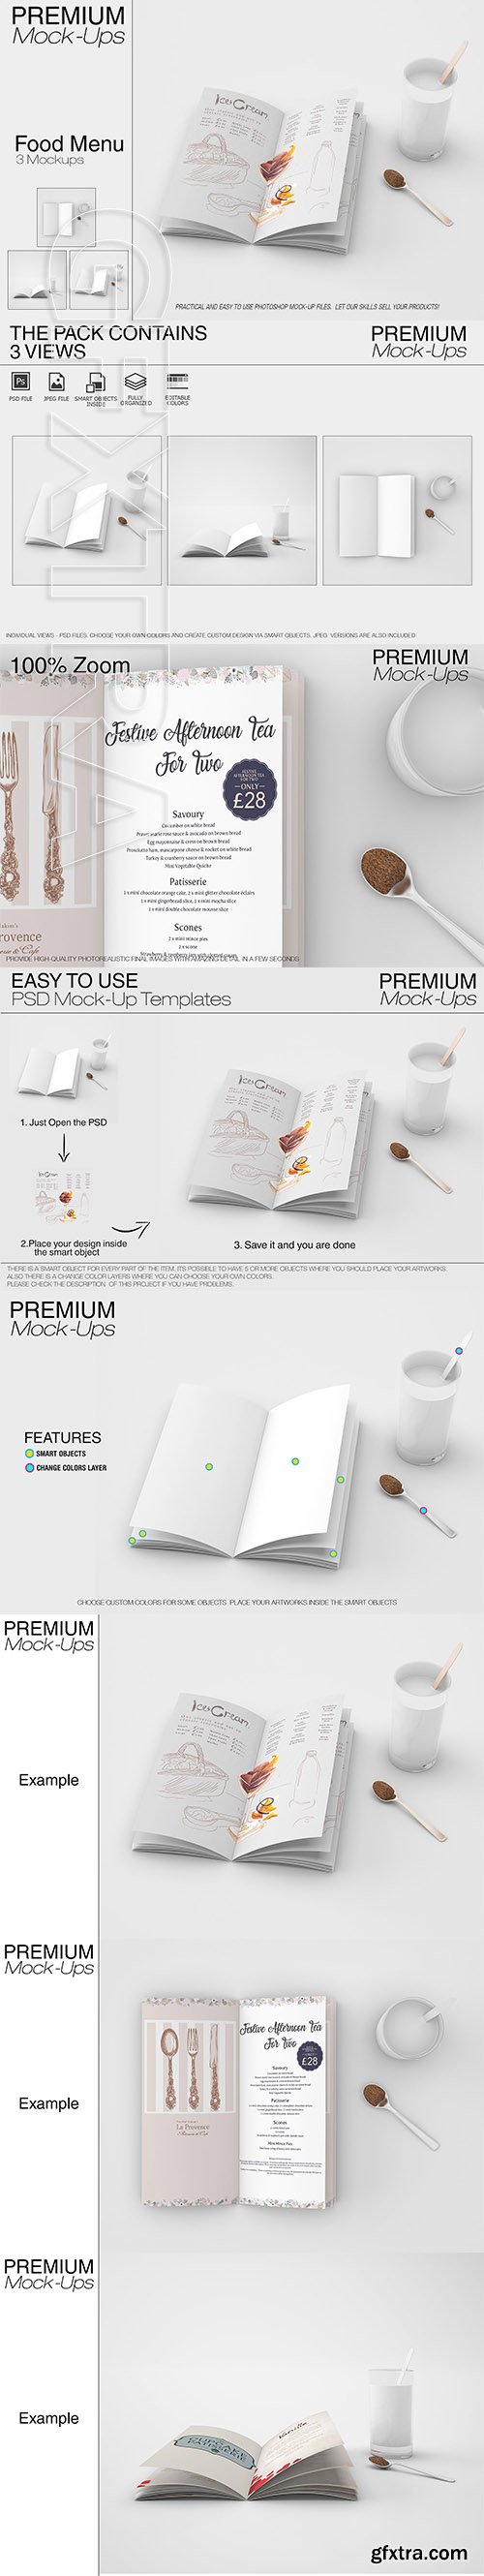 CreativeMarket - Food & Drink Menu Mockup Set 2599585